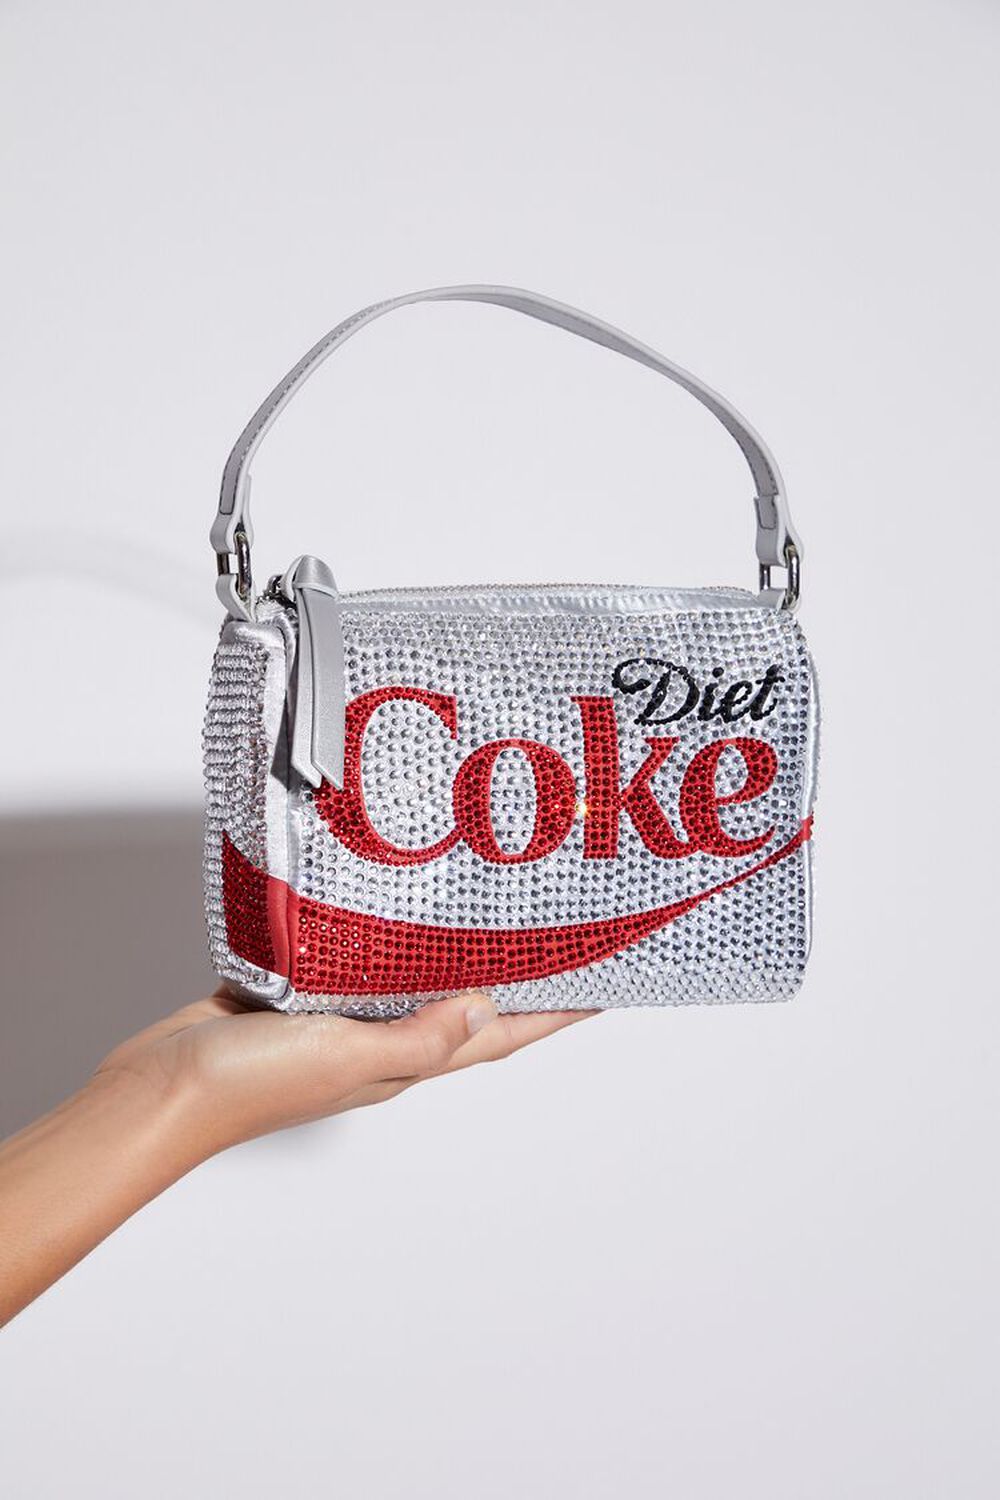 Coca-Cola Diet Coke Handbag, image 2